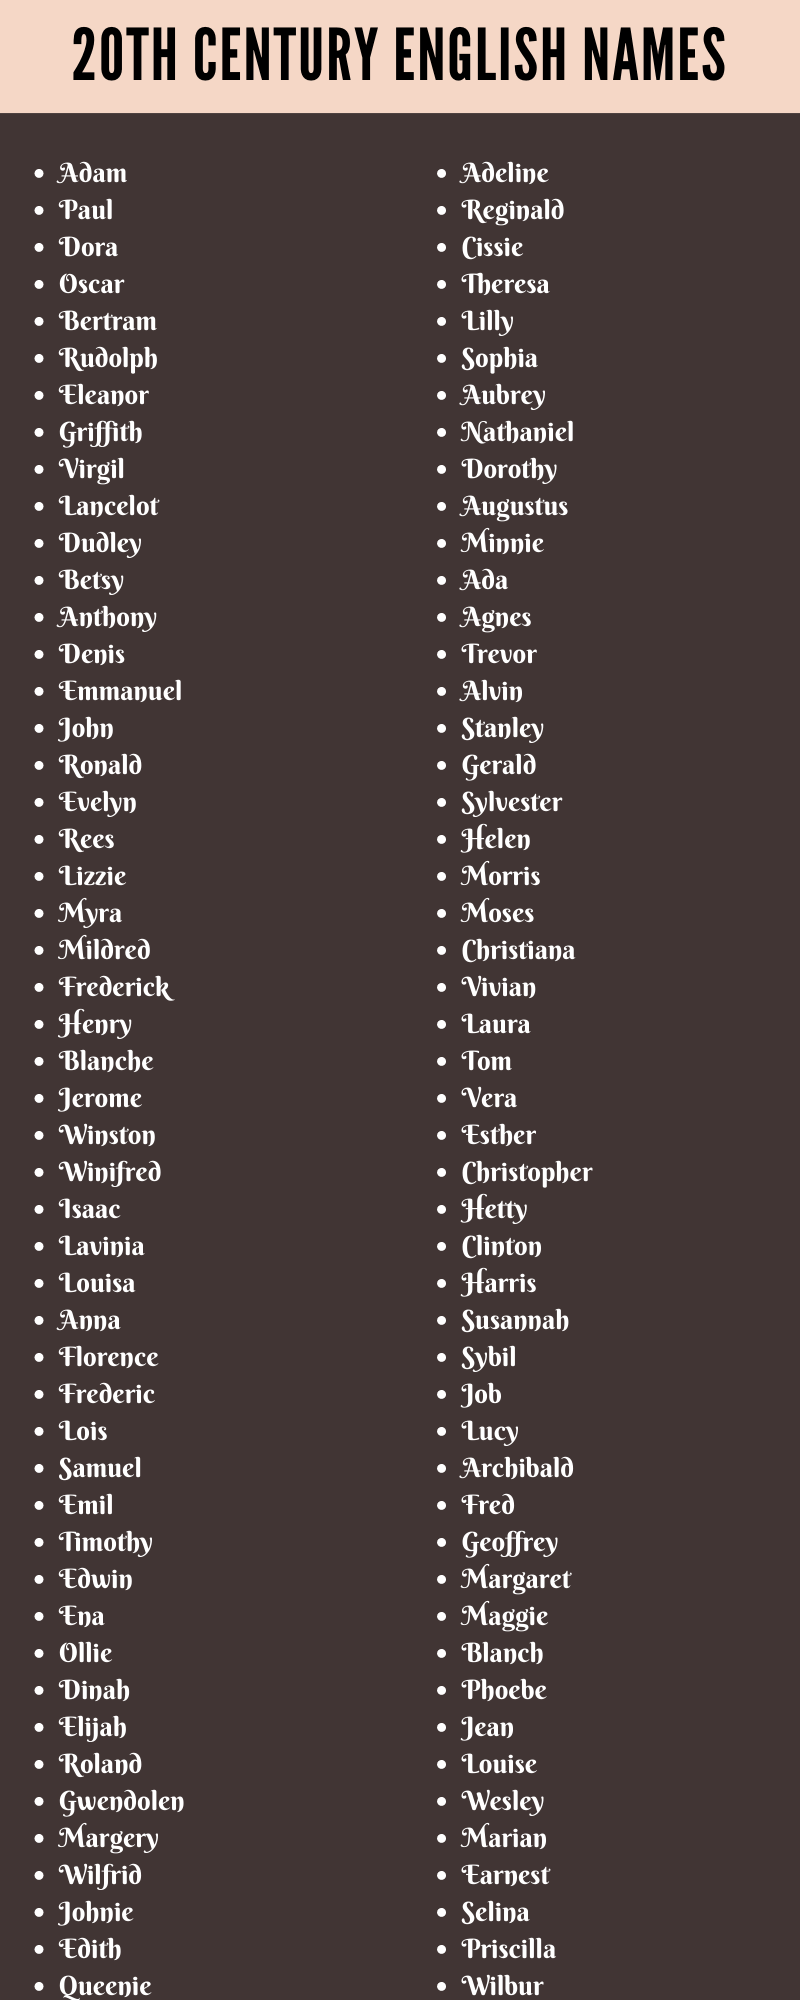 20th Century English Names